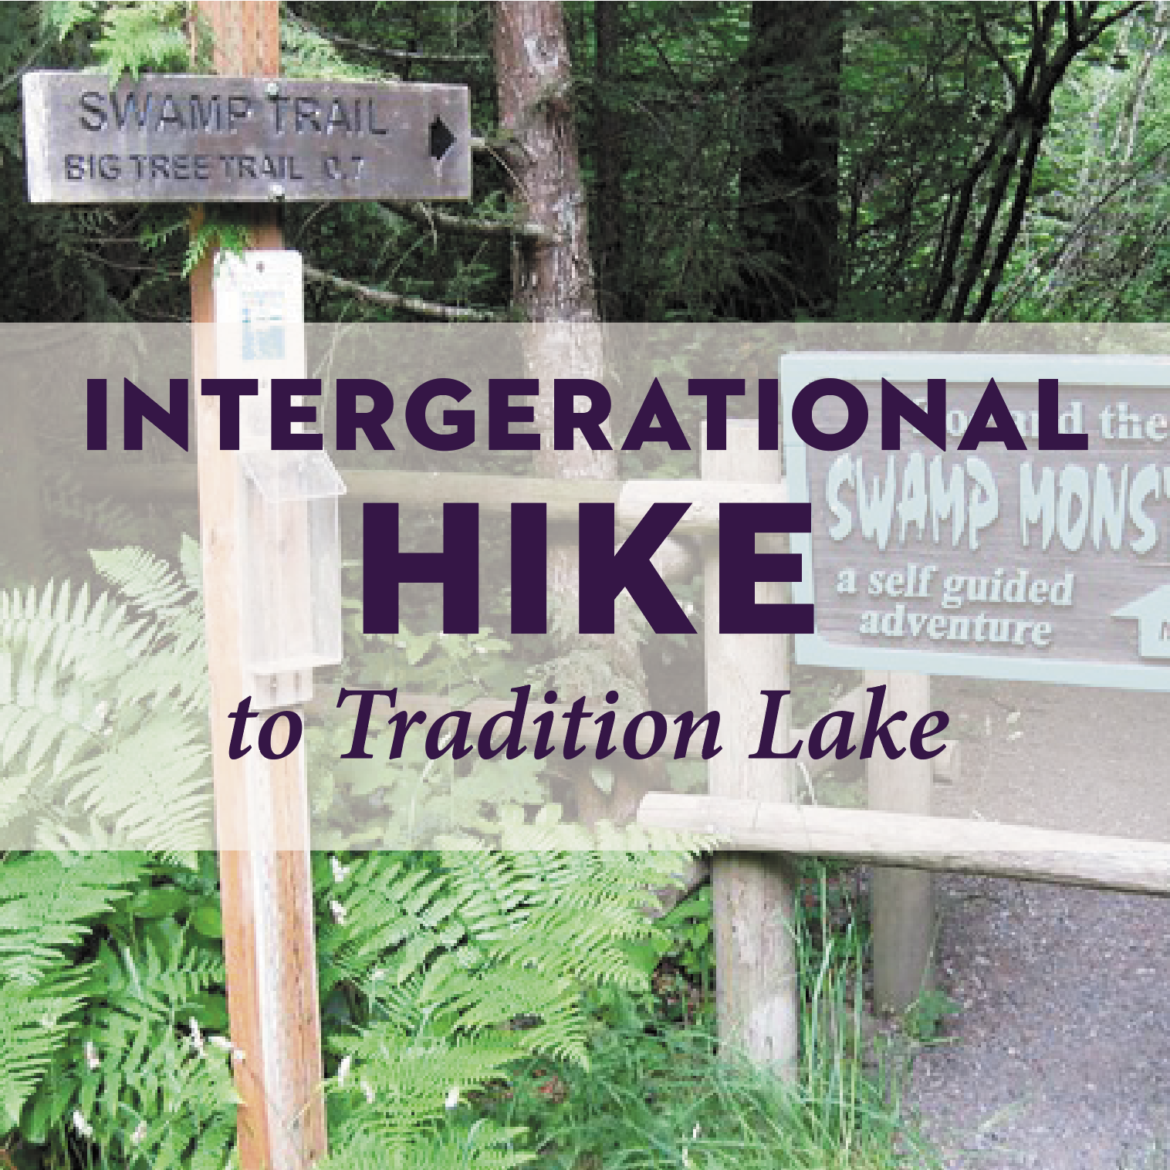 Intergenerational Hike to Tradition Lake